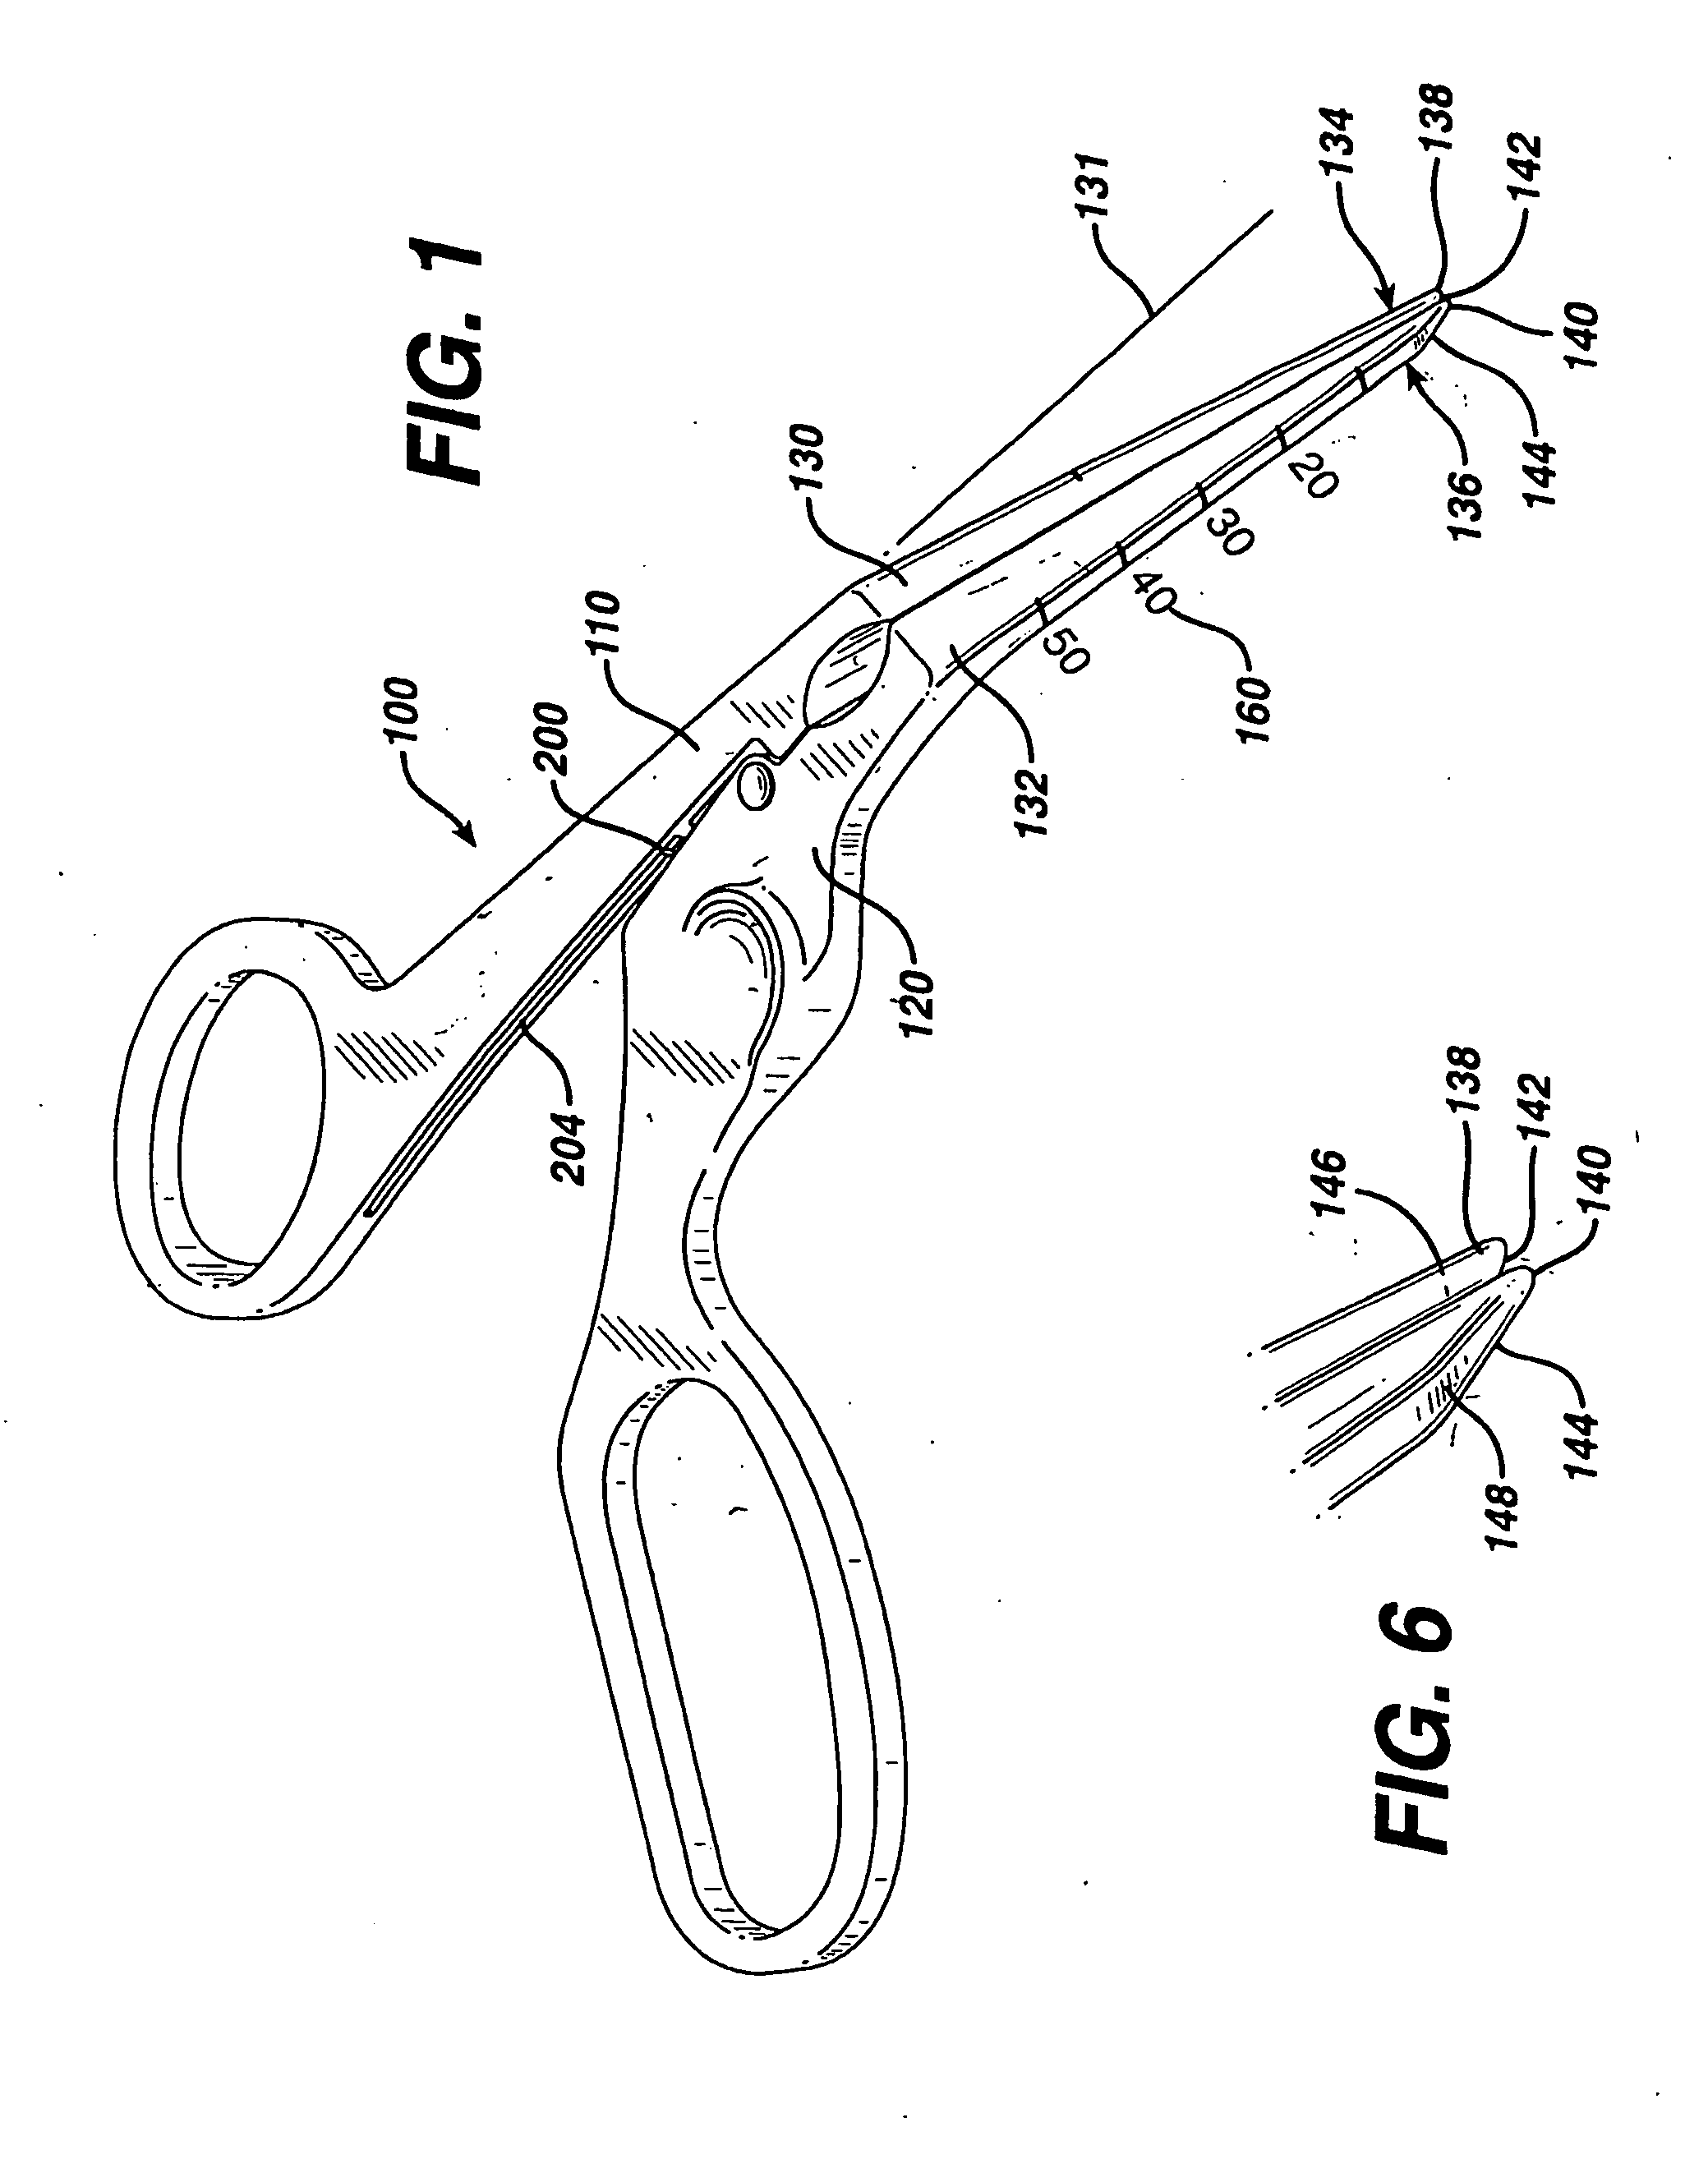 Ergonomic hand instrument